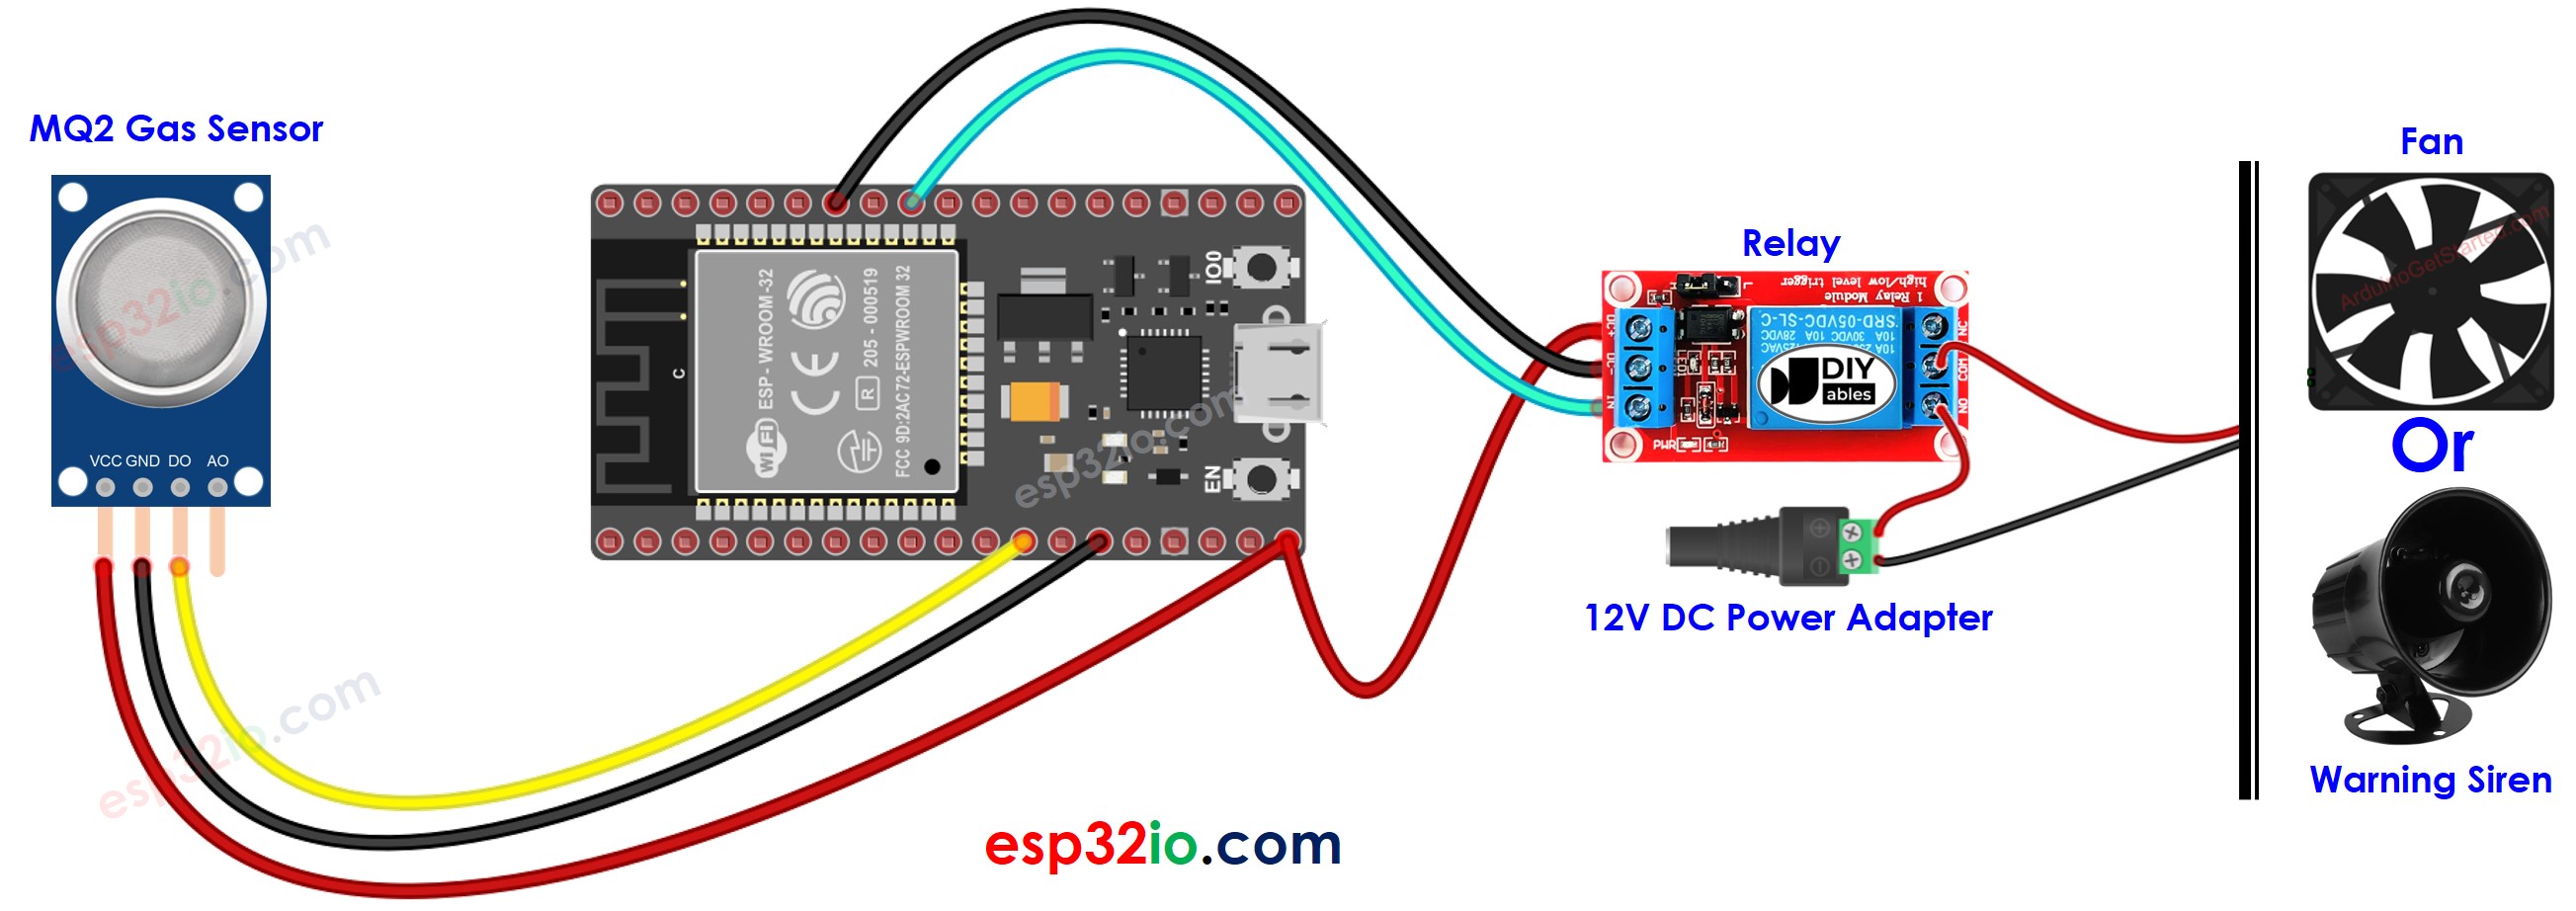 ESP32 MQ2 Gas Sensor Relay Wiring Diagram